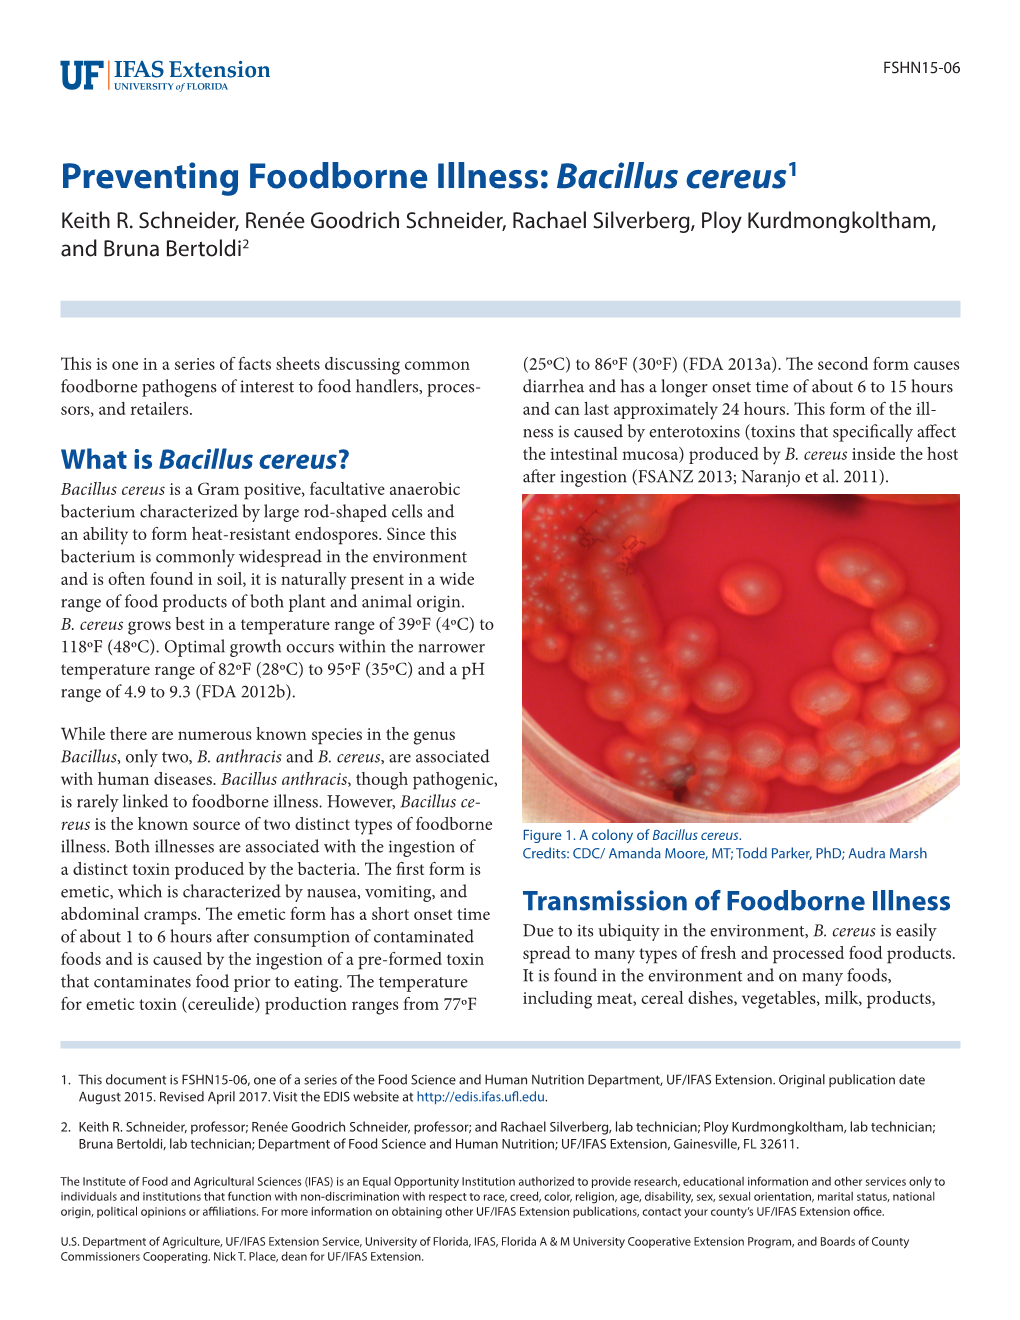 Preventing Foodborne Illness: Bacillus Cereus1 Keith R